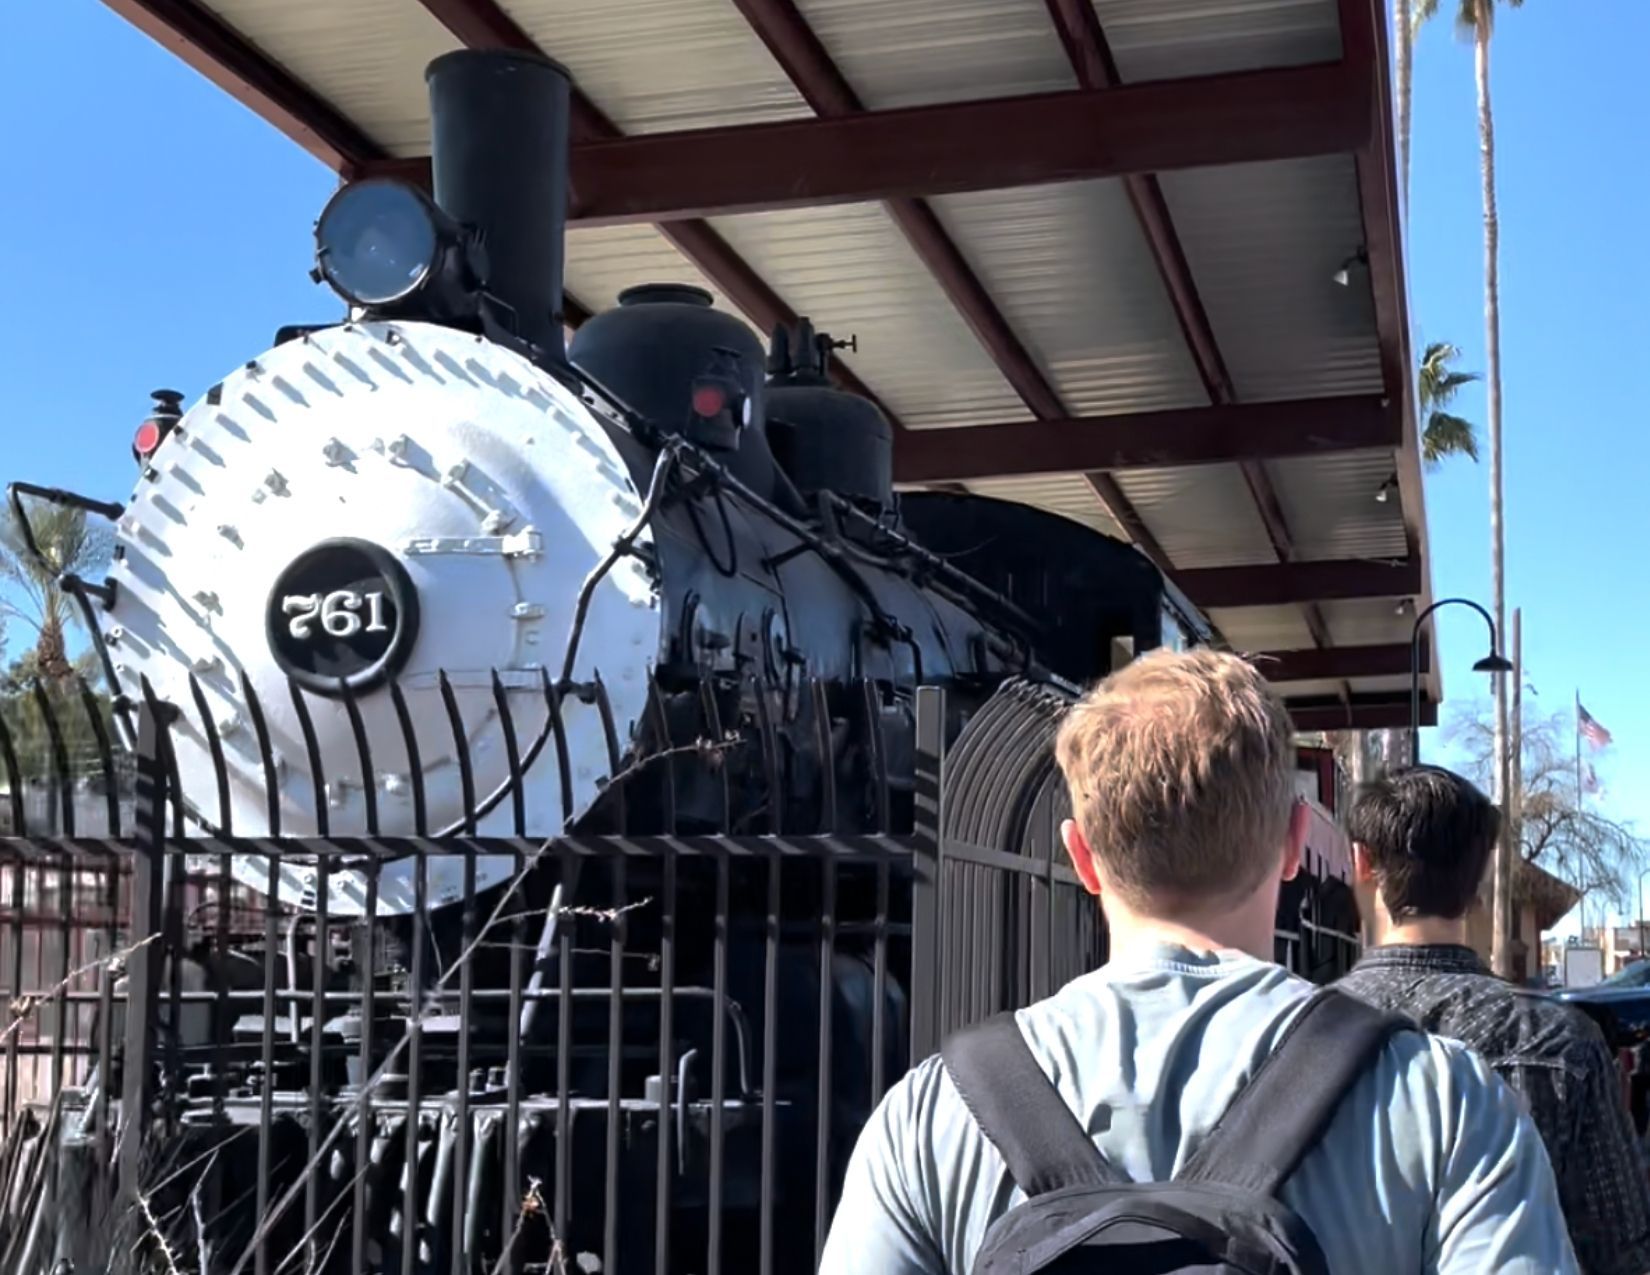 steam engine number 761 displayed in Wickenburg, Arizona